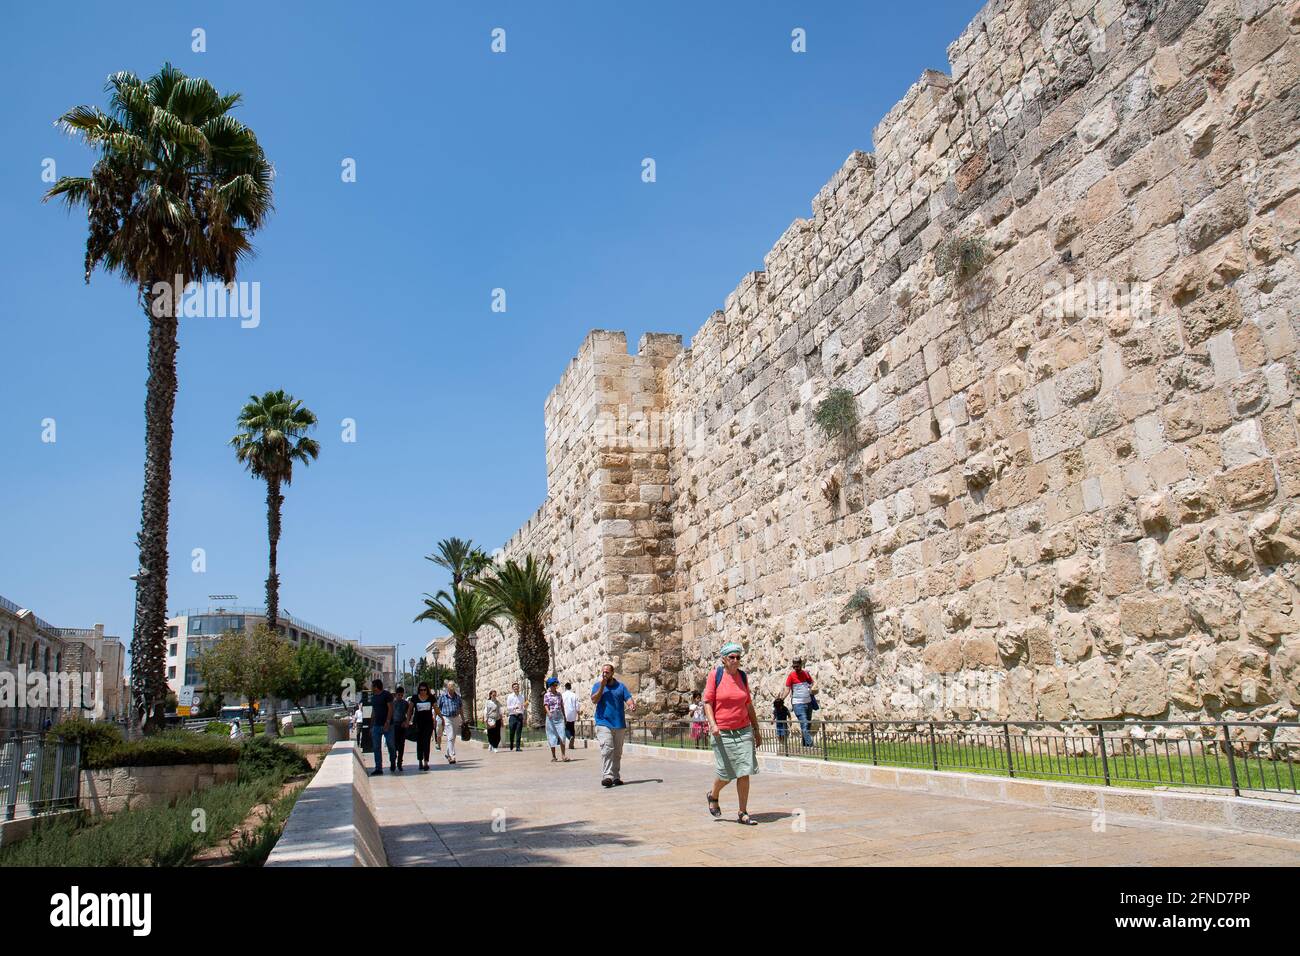 Tourists walking nearby Jerusalem's Old City walls. Stock Photo